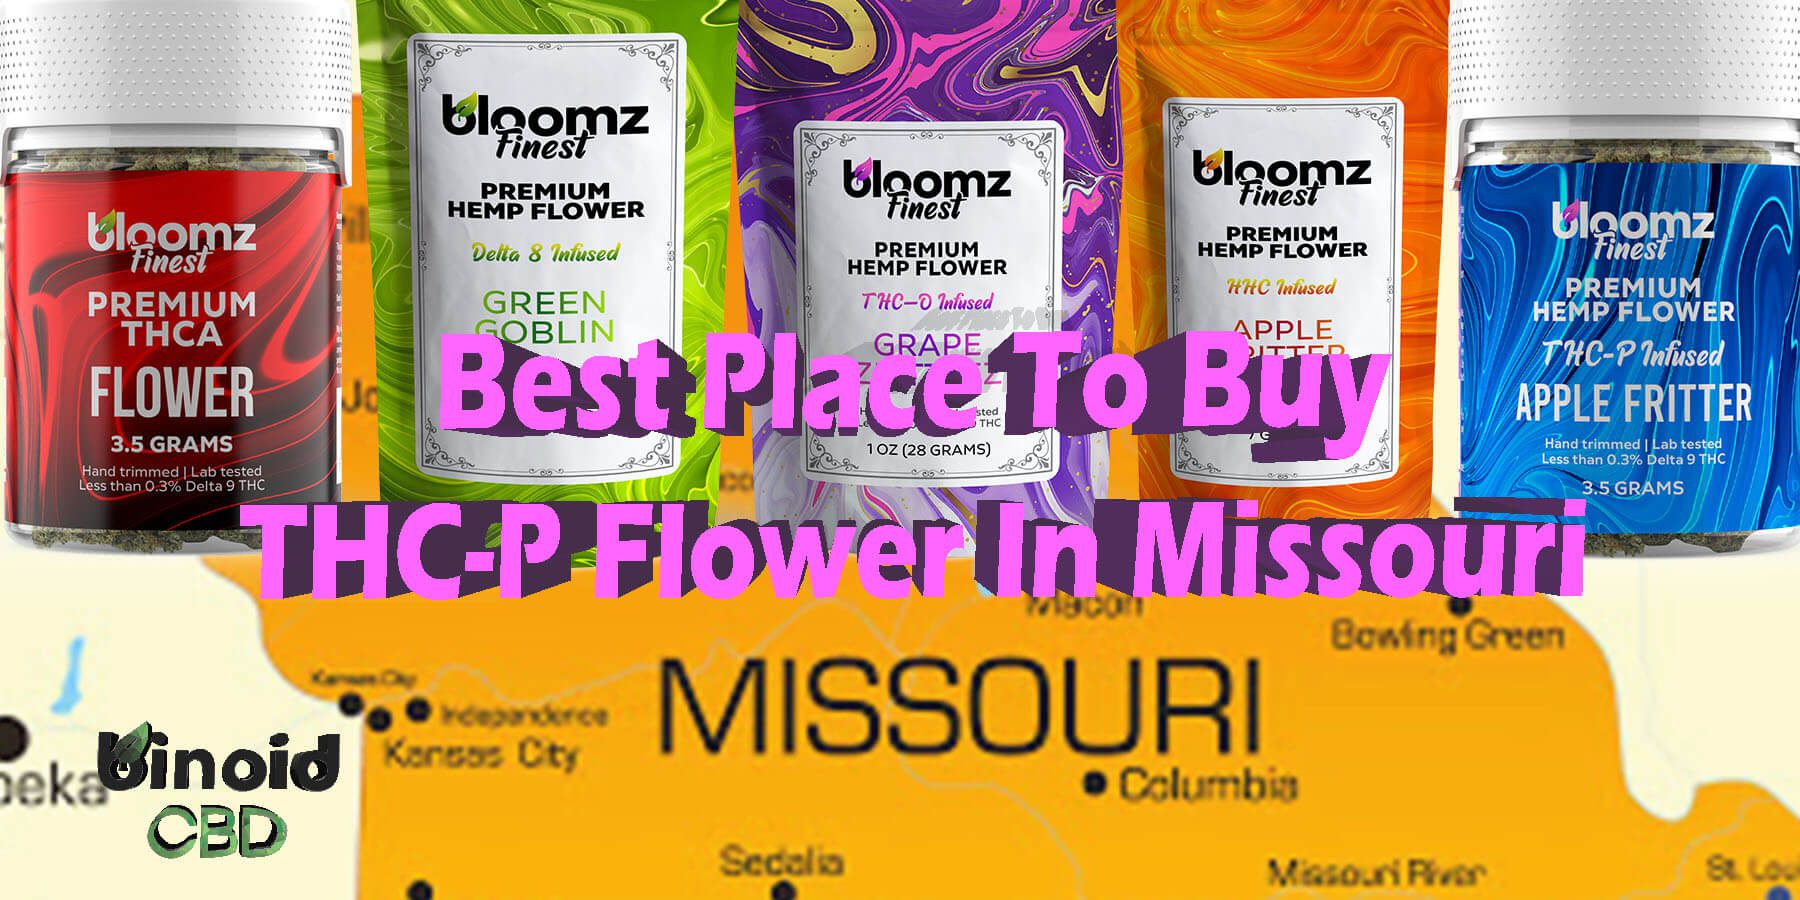 Buy THCP Flower Missouri Get Online Near Me For Sale Best Brand Strongest Real Legal Store Shop Reddit